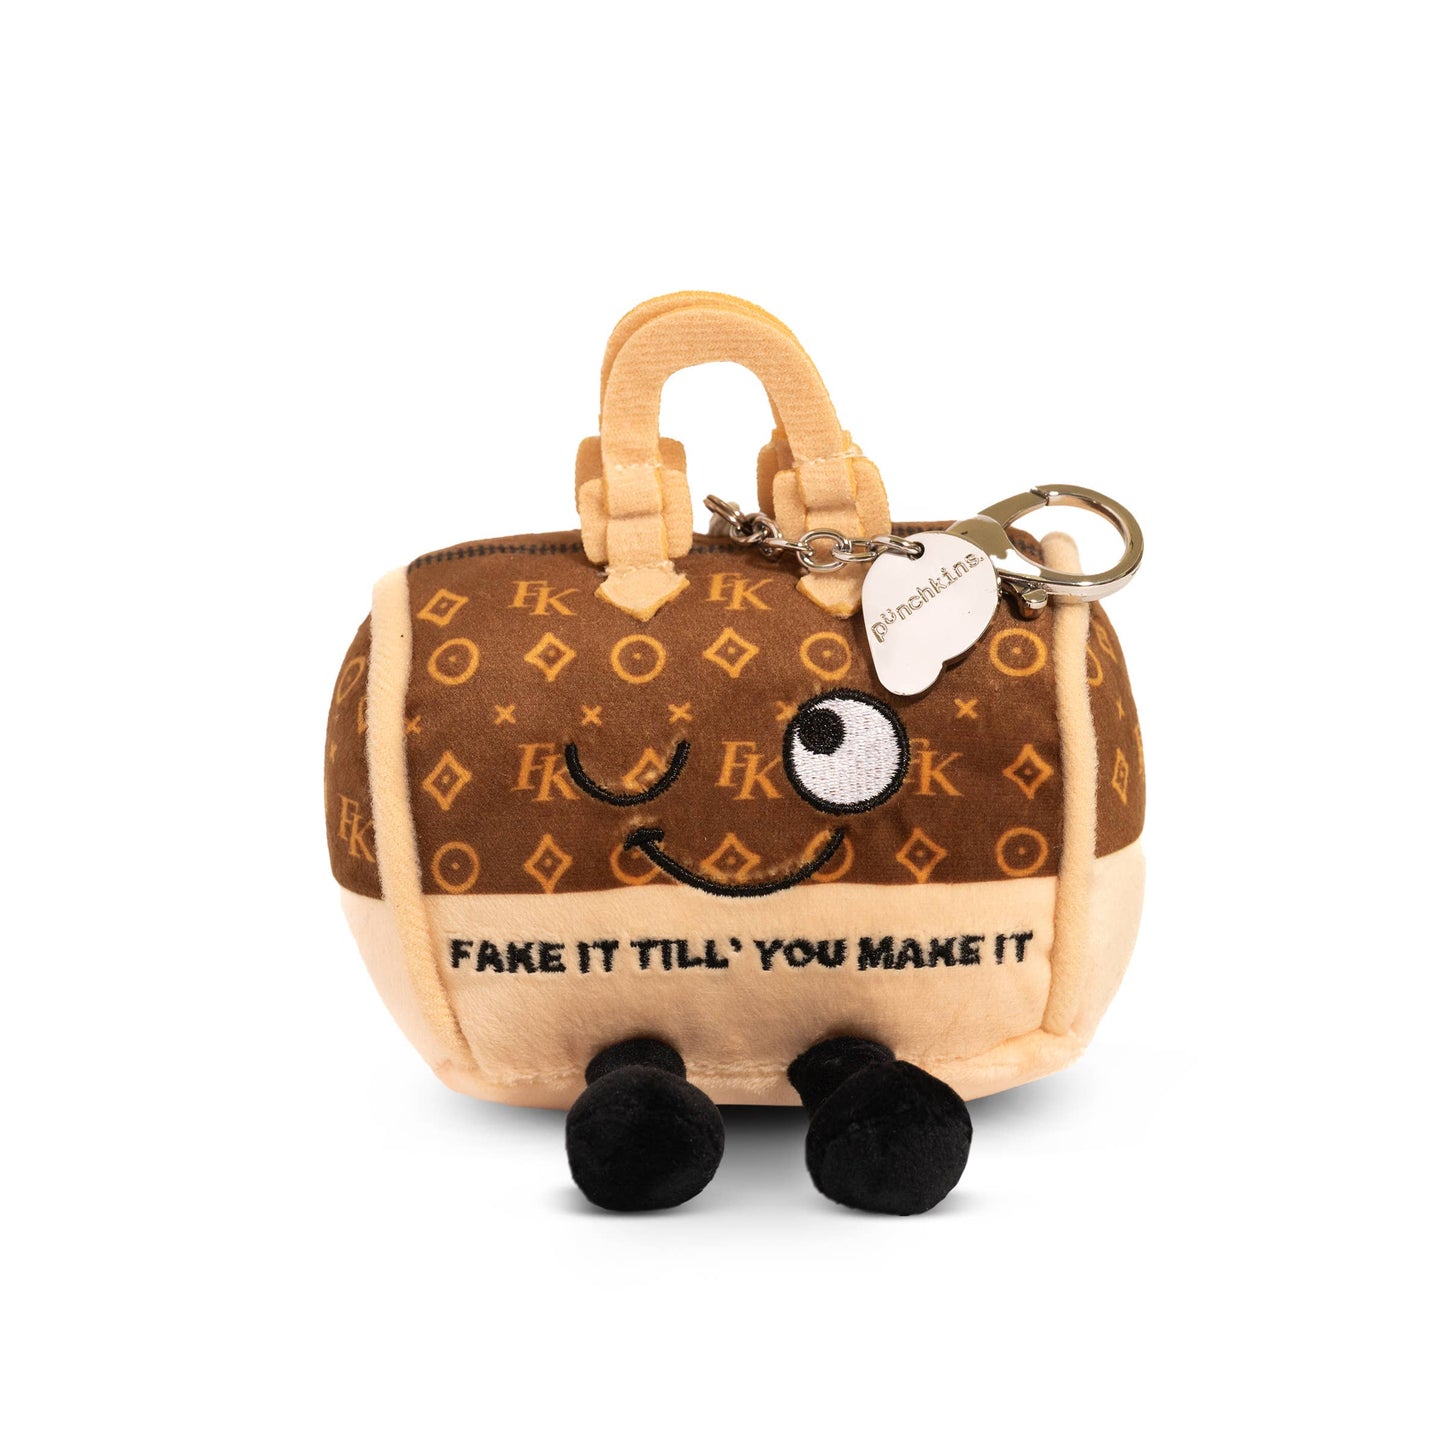 Punchkins Handbag "Fake it" Plush Keychain